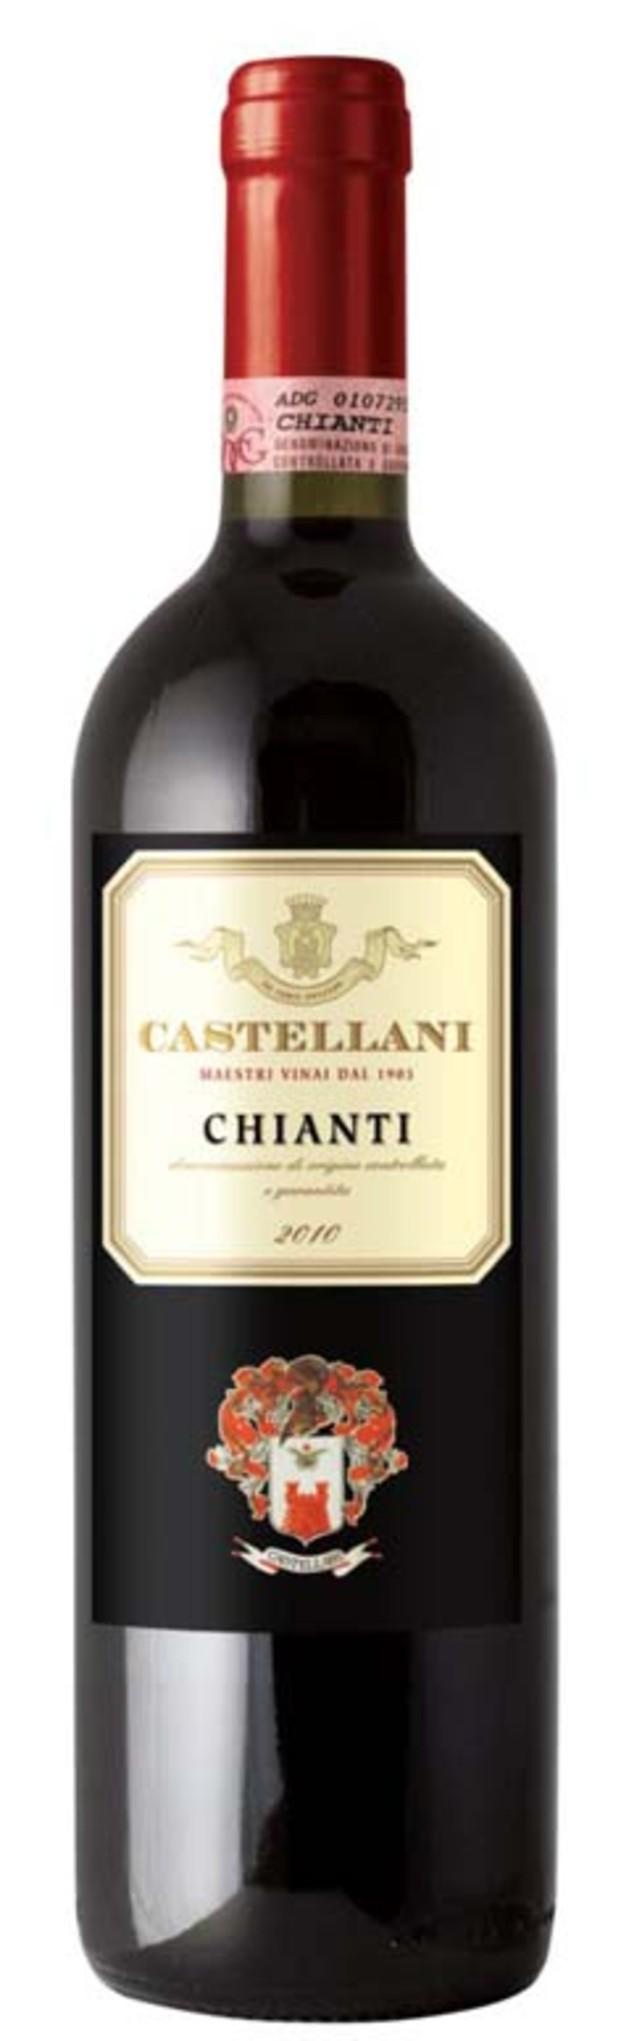 Chianti Docg Castellani. Toscana, 85% Sangiovese, 10% Canaiolo